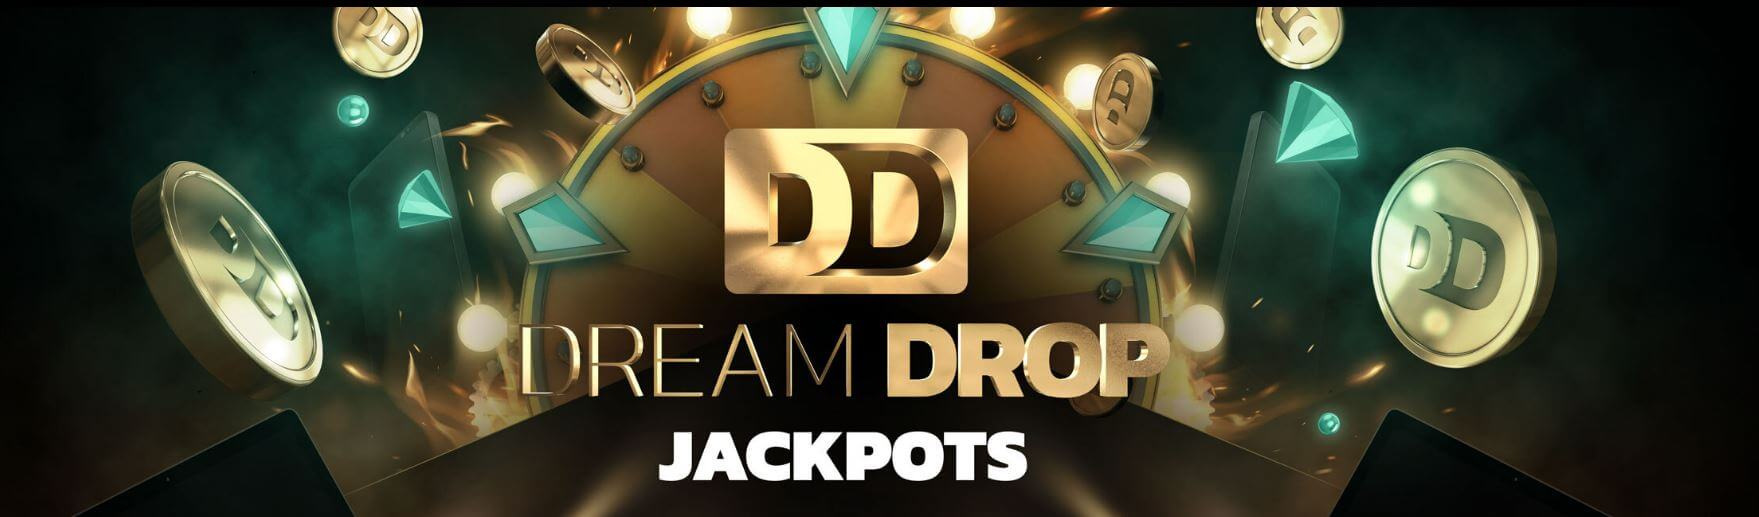 Relax Gaming ออกแจ็คพ็อตใหม่ Dream Drop ลุ้นแจ็คพ็อตสูงสุดเกือบ 400 ล้านบาท!